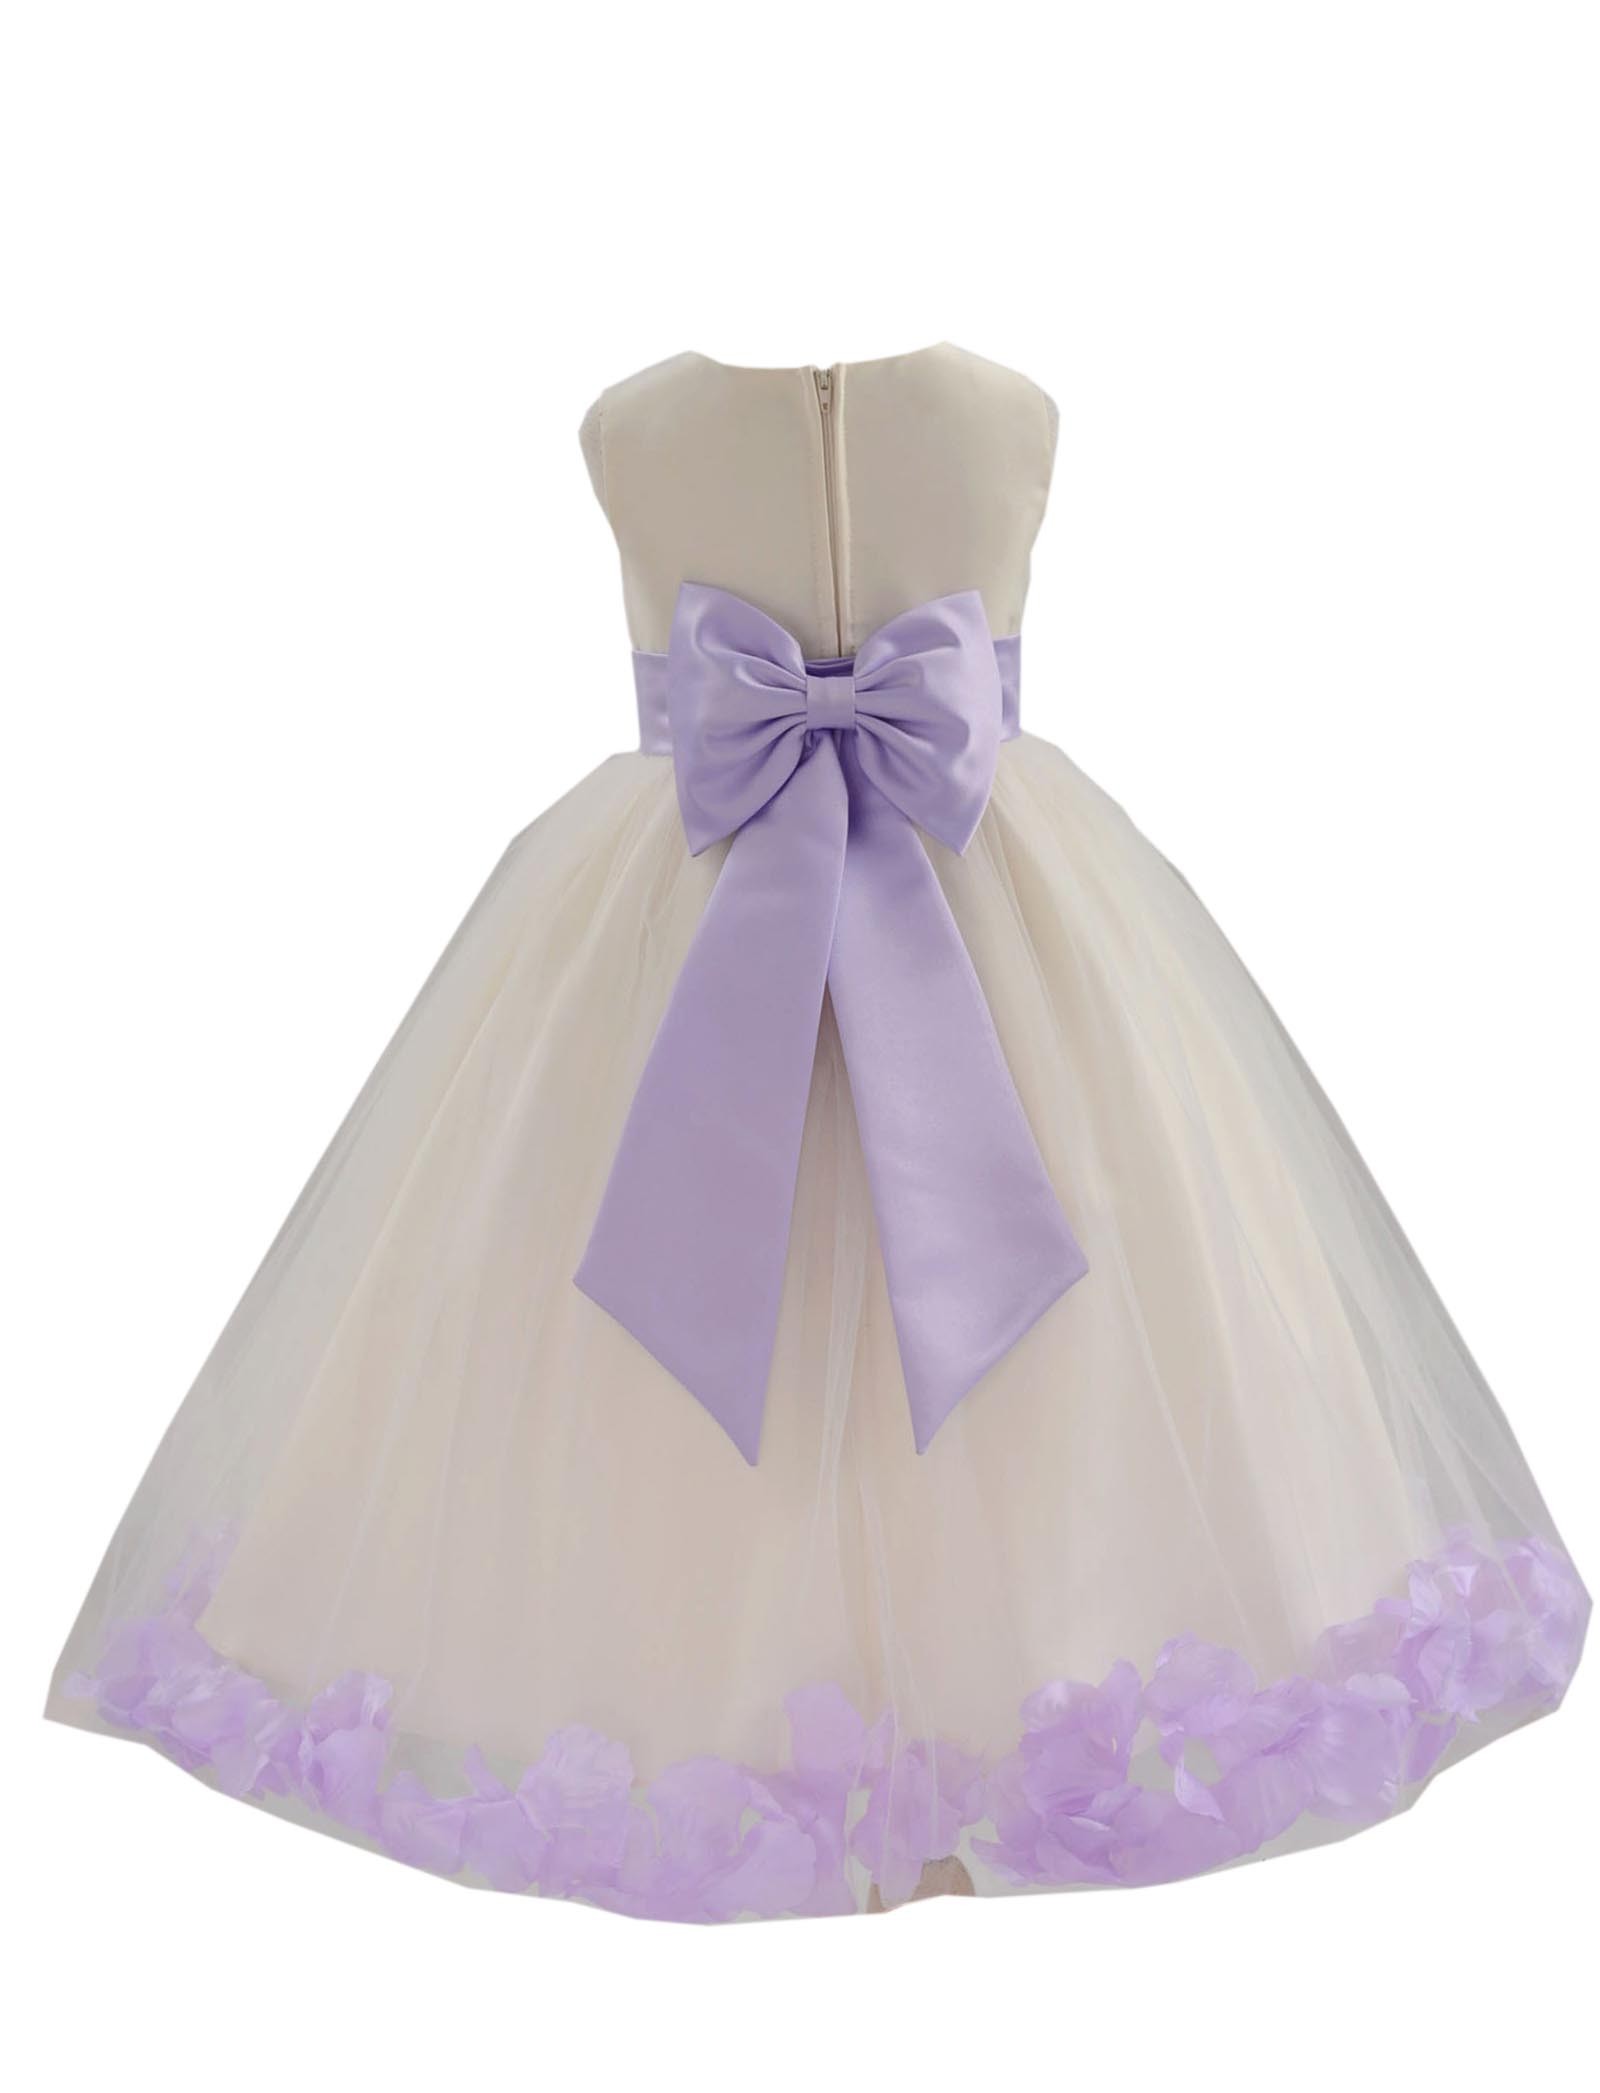 Ivory/Lilac Tulle Rose Petals Flower Girl Dress Recital 302a